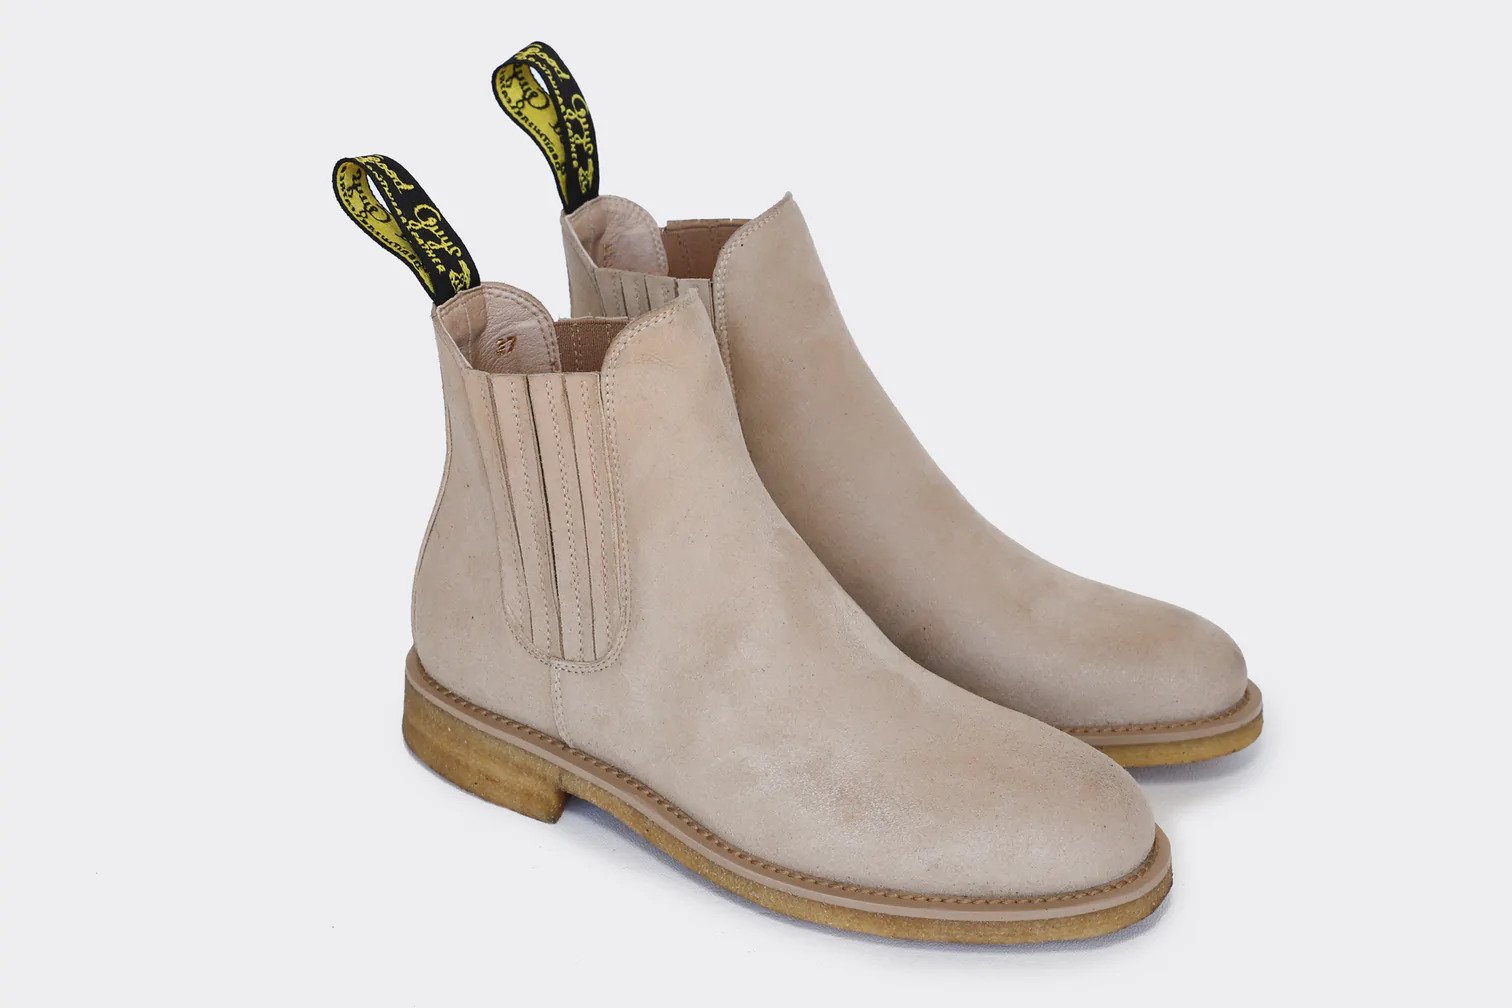 JIMMY vegan Dealer Boots ($251.90)